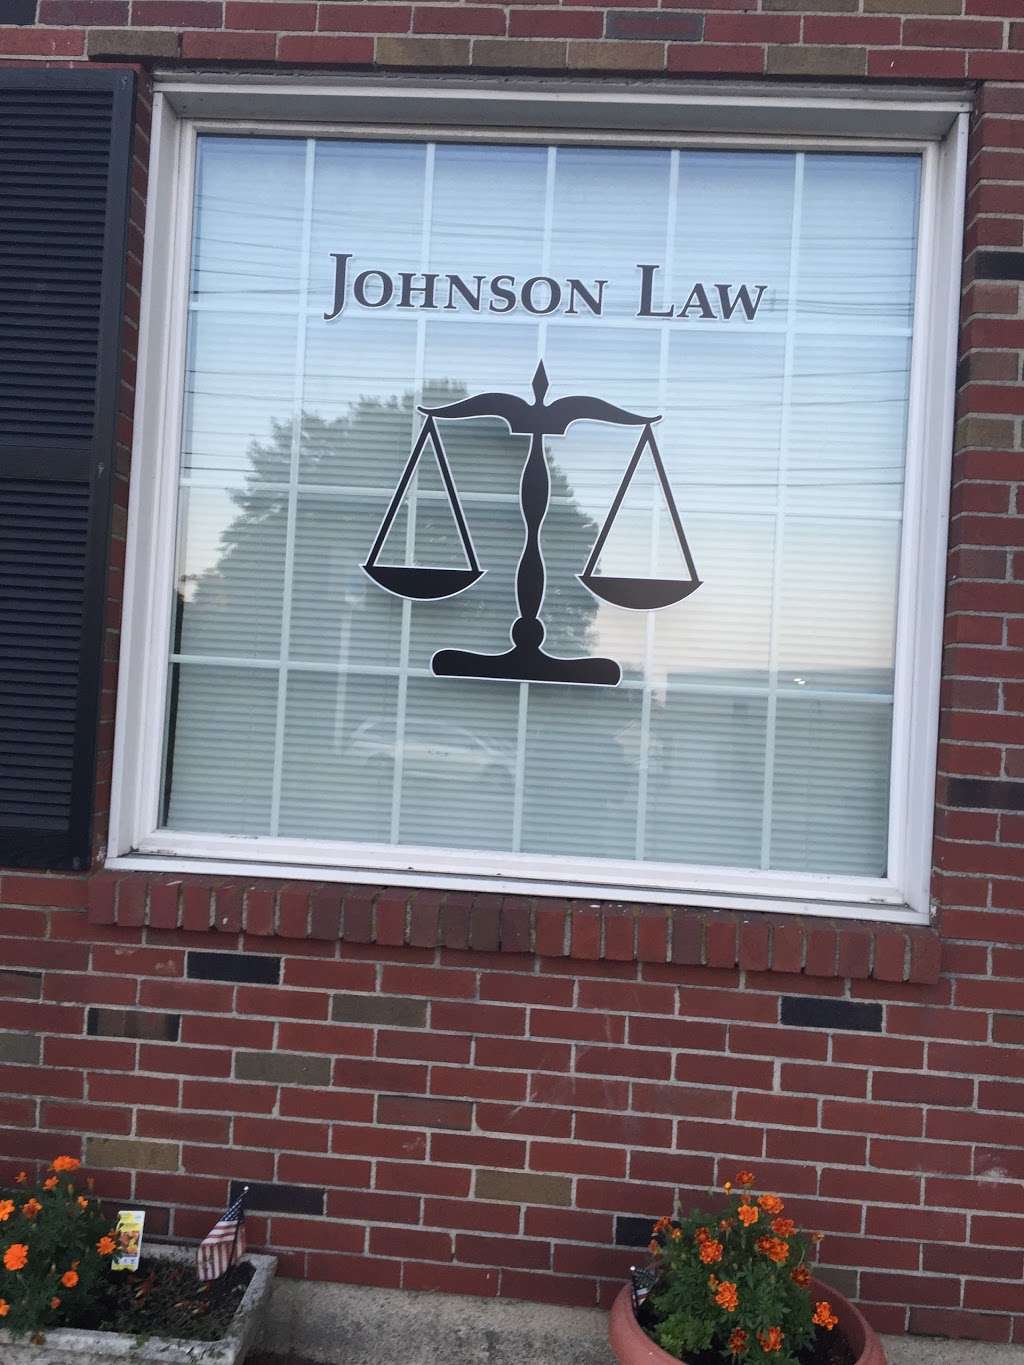 Johnson Law & Pip Recovery | 255 Main St, Weymouth, MA 02188 | Phone: (339) 205-2133